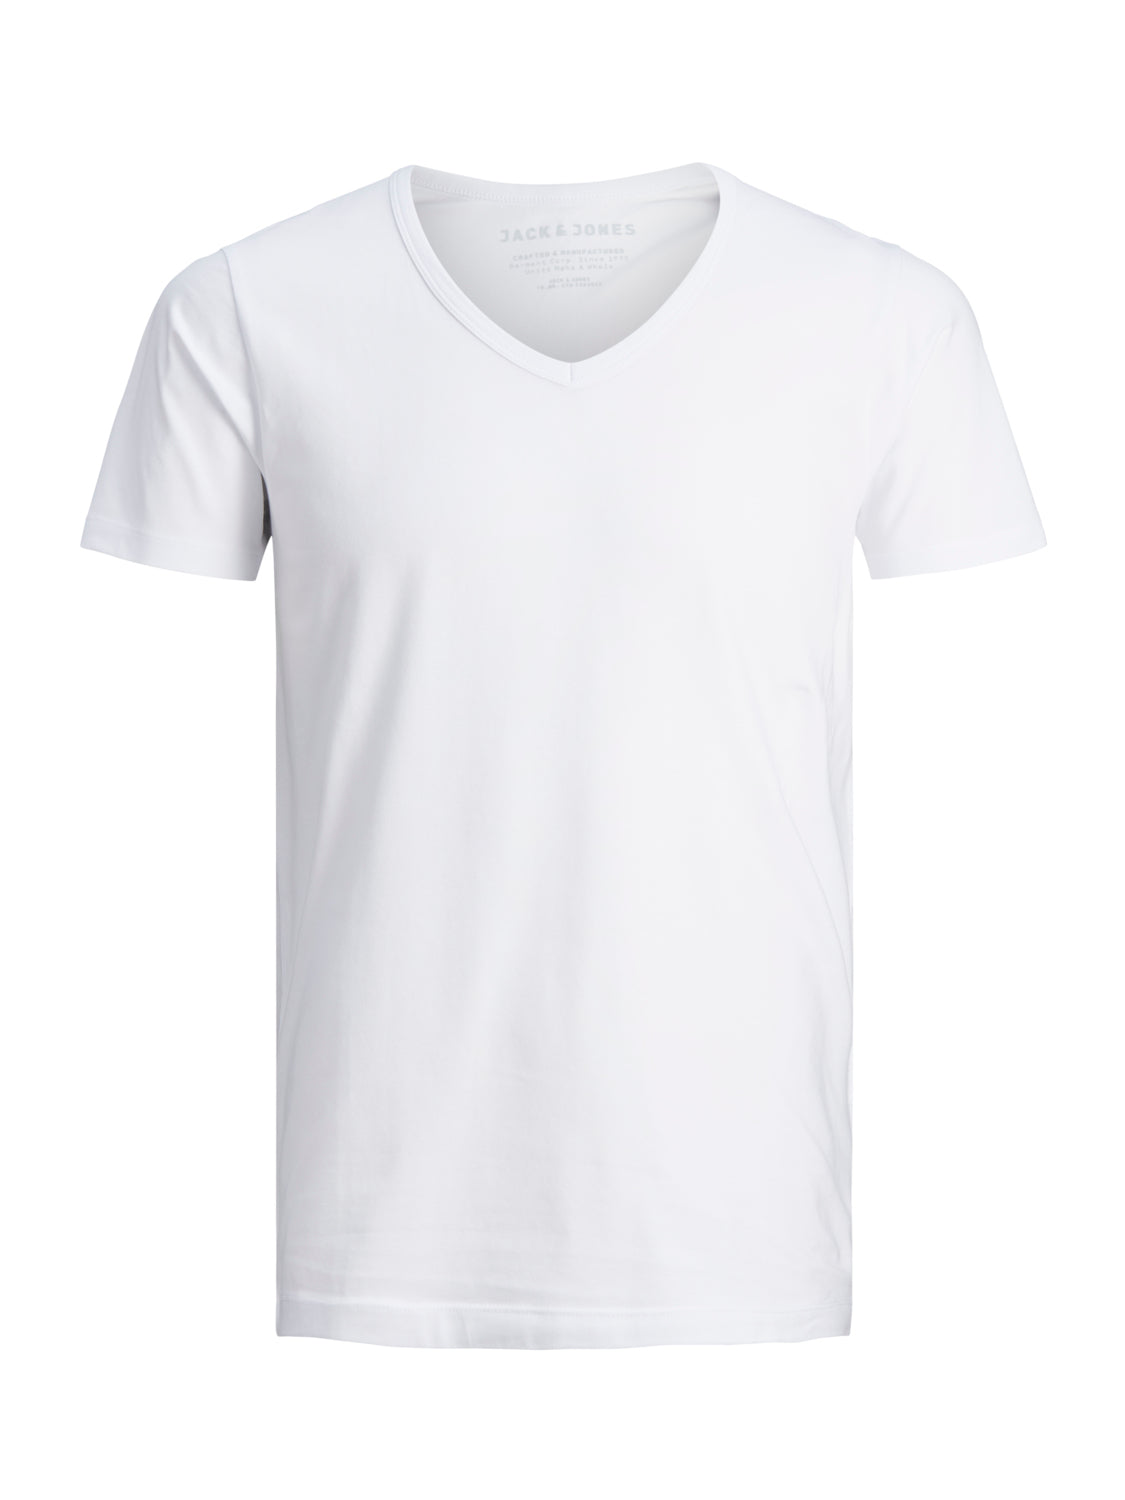 JJEBASIC T-Shirt - opt white